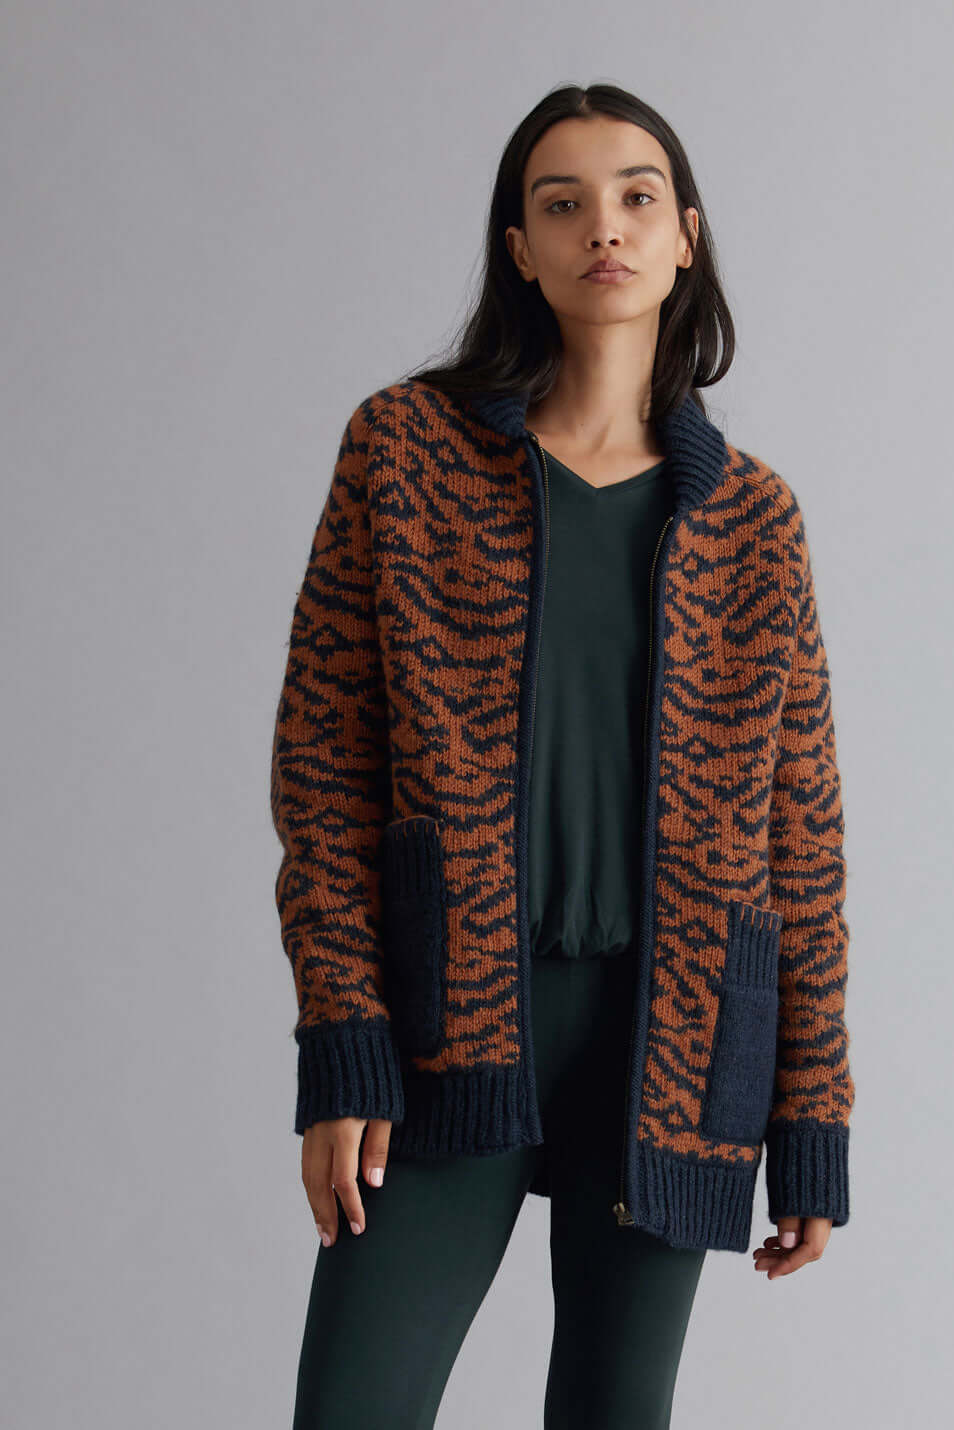 TIGER RUG Womens Lambswool Jacket Tiger Rug Jacquard, Size 3 / UK 12 / EUR 40